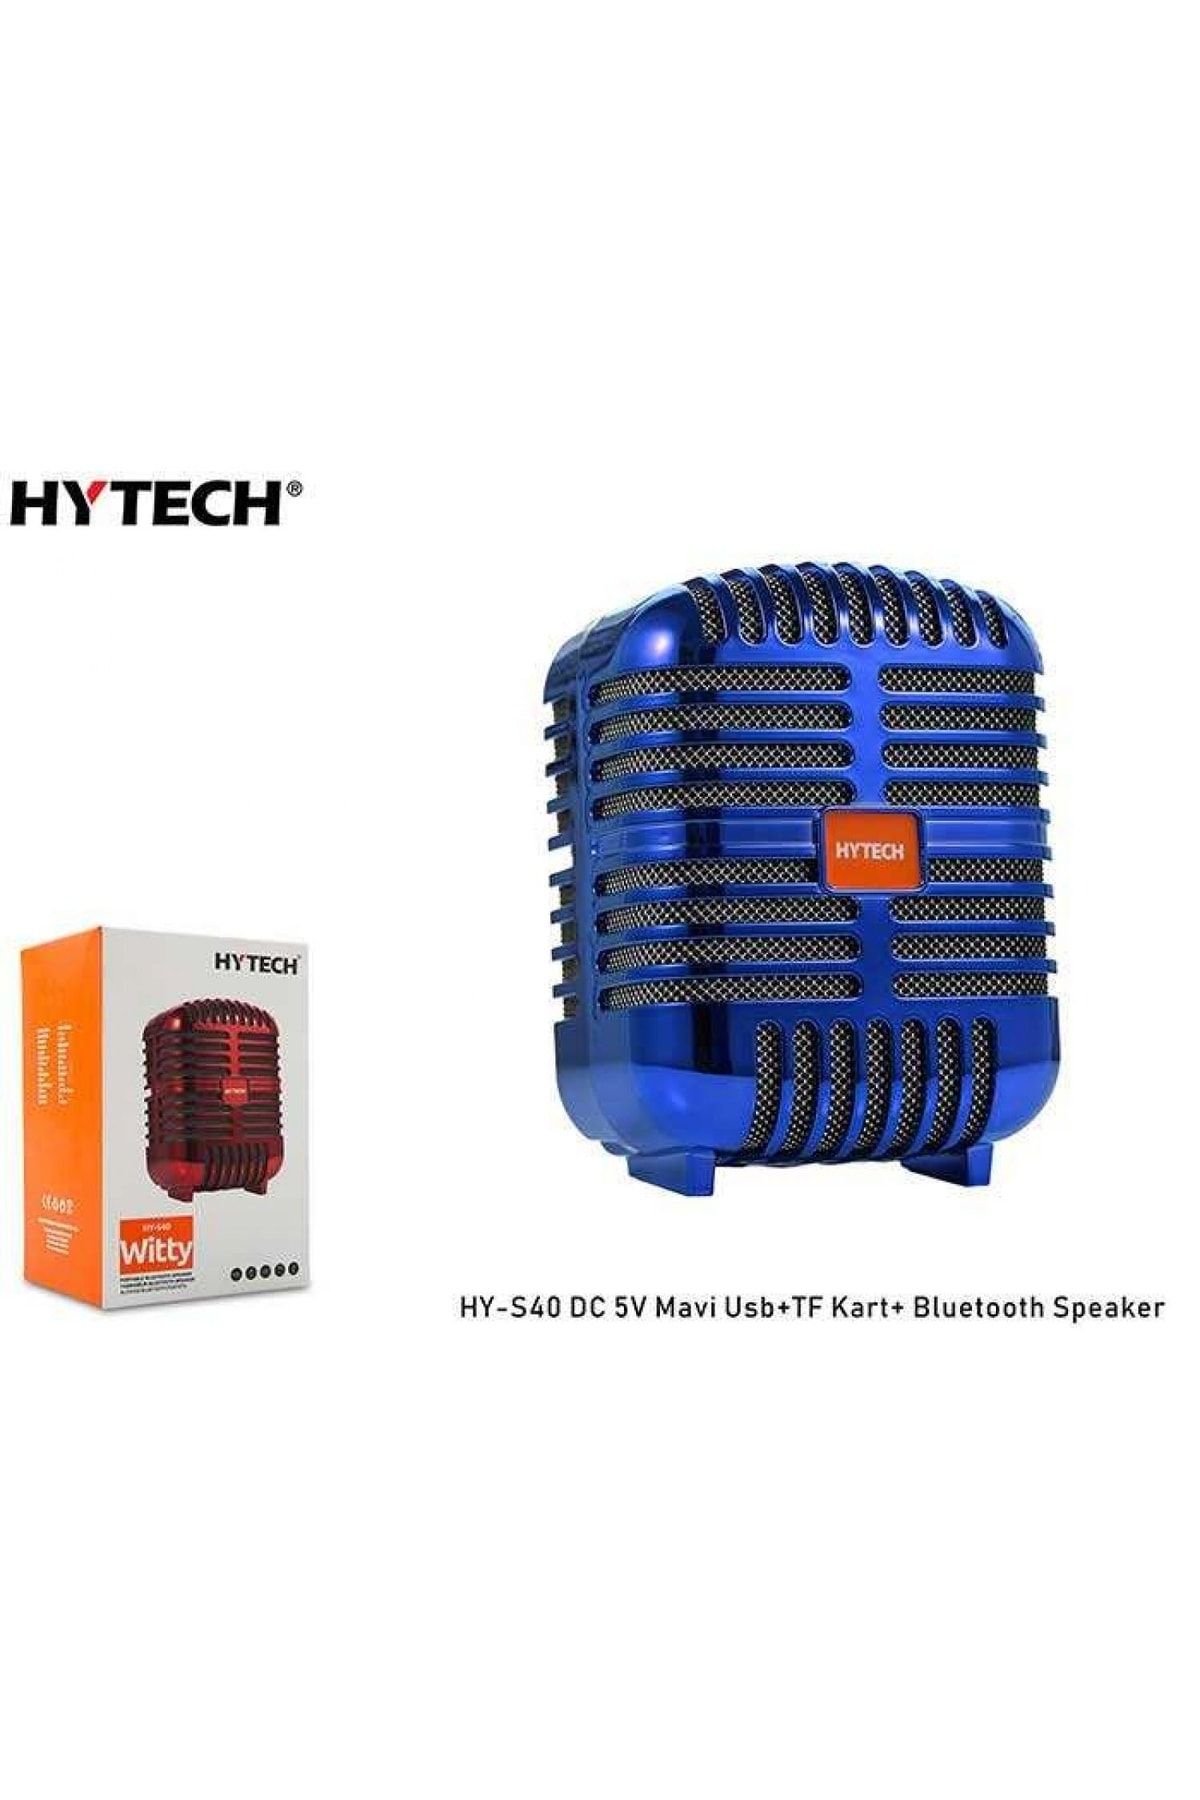 Hytech Hy-s40 Mavi Usb+tf Kart Dc 5v Bluetooth Speaker